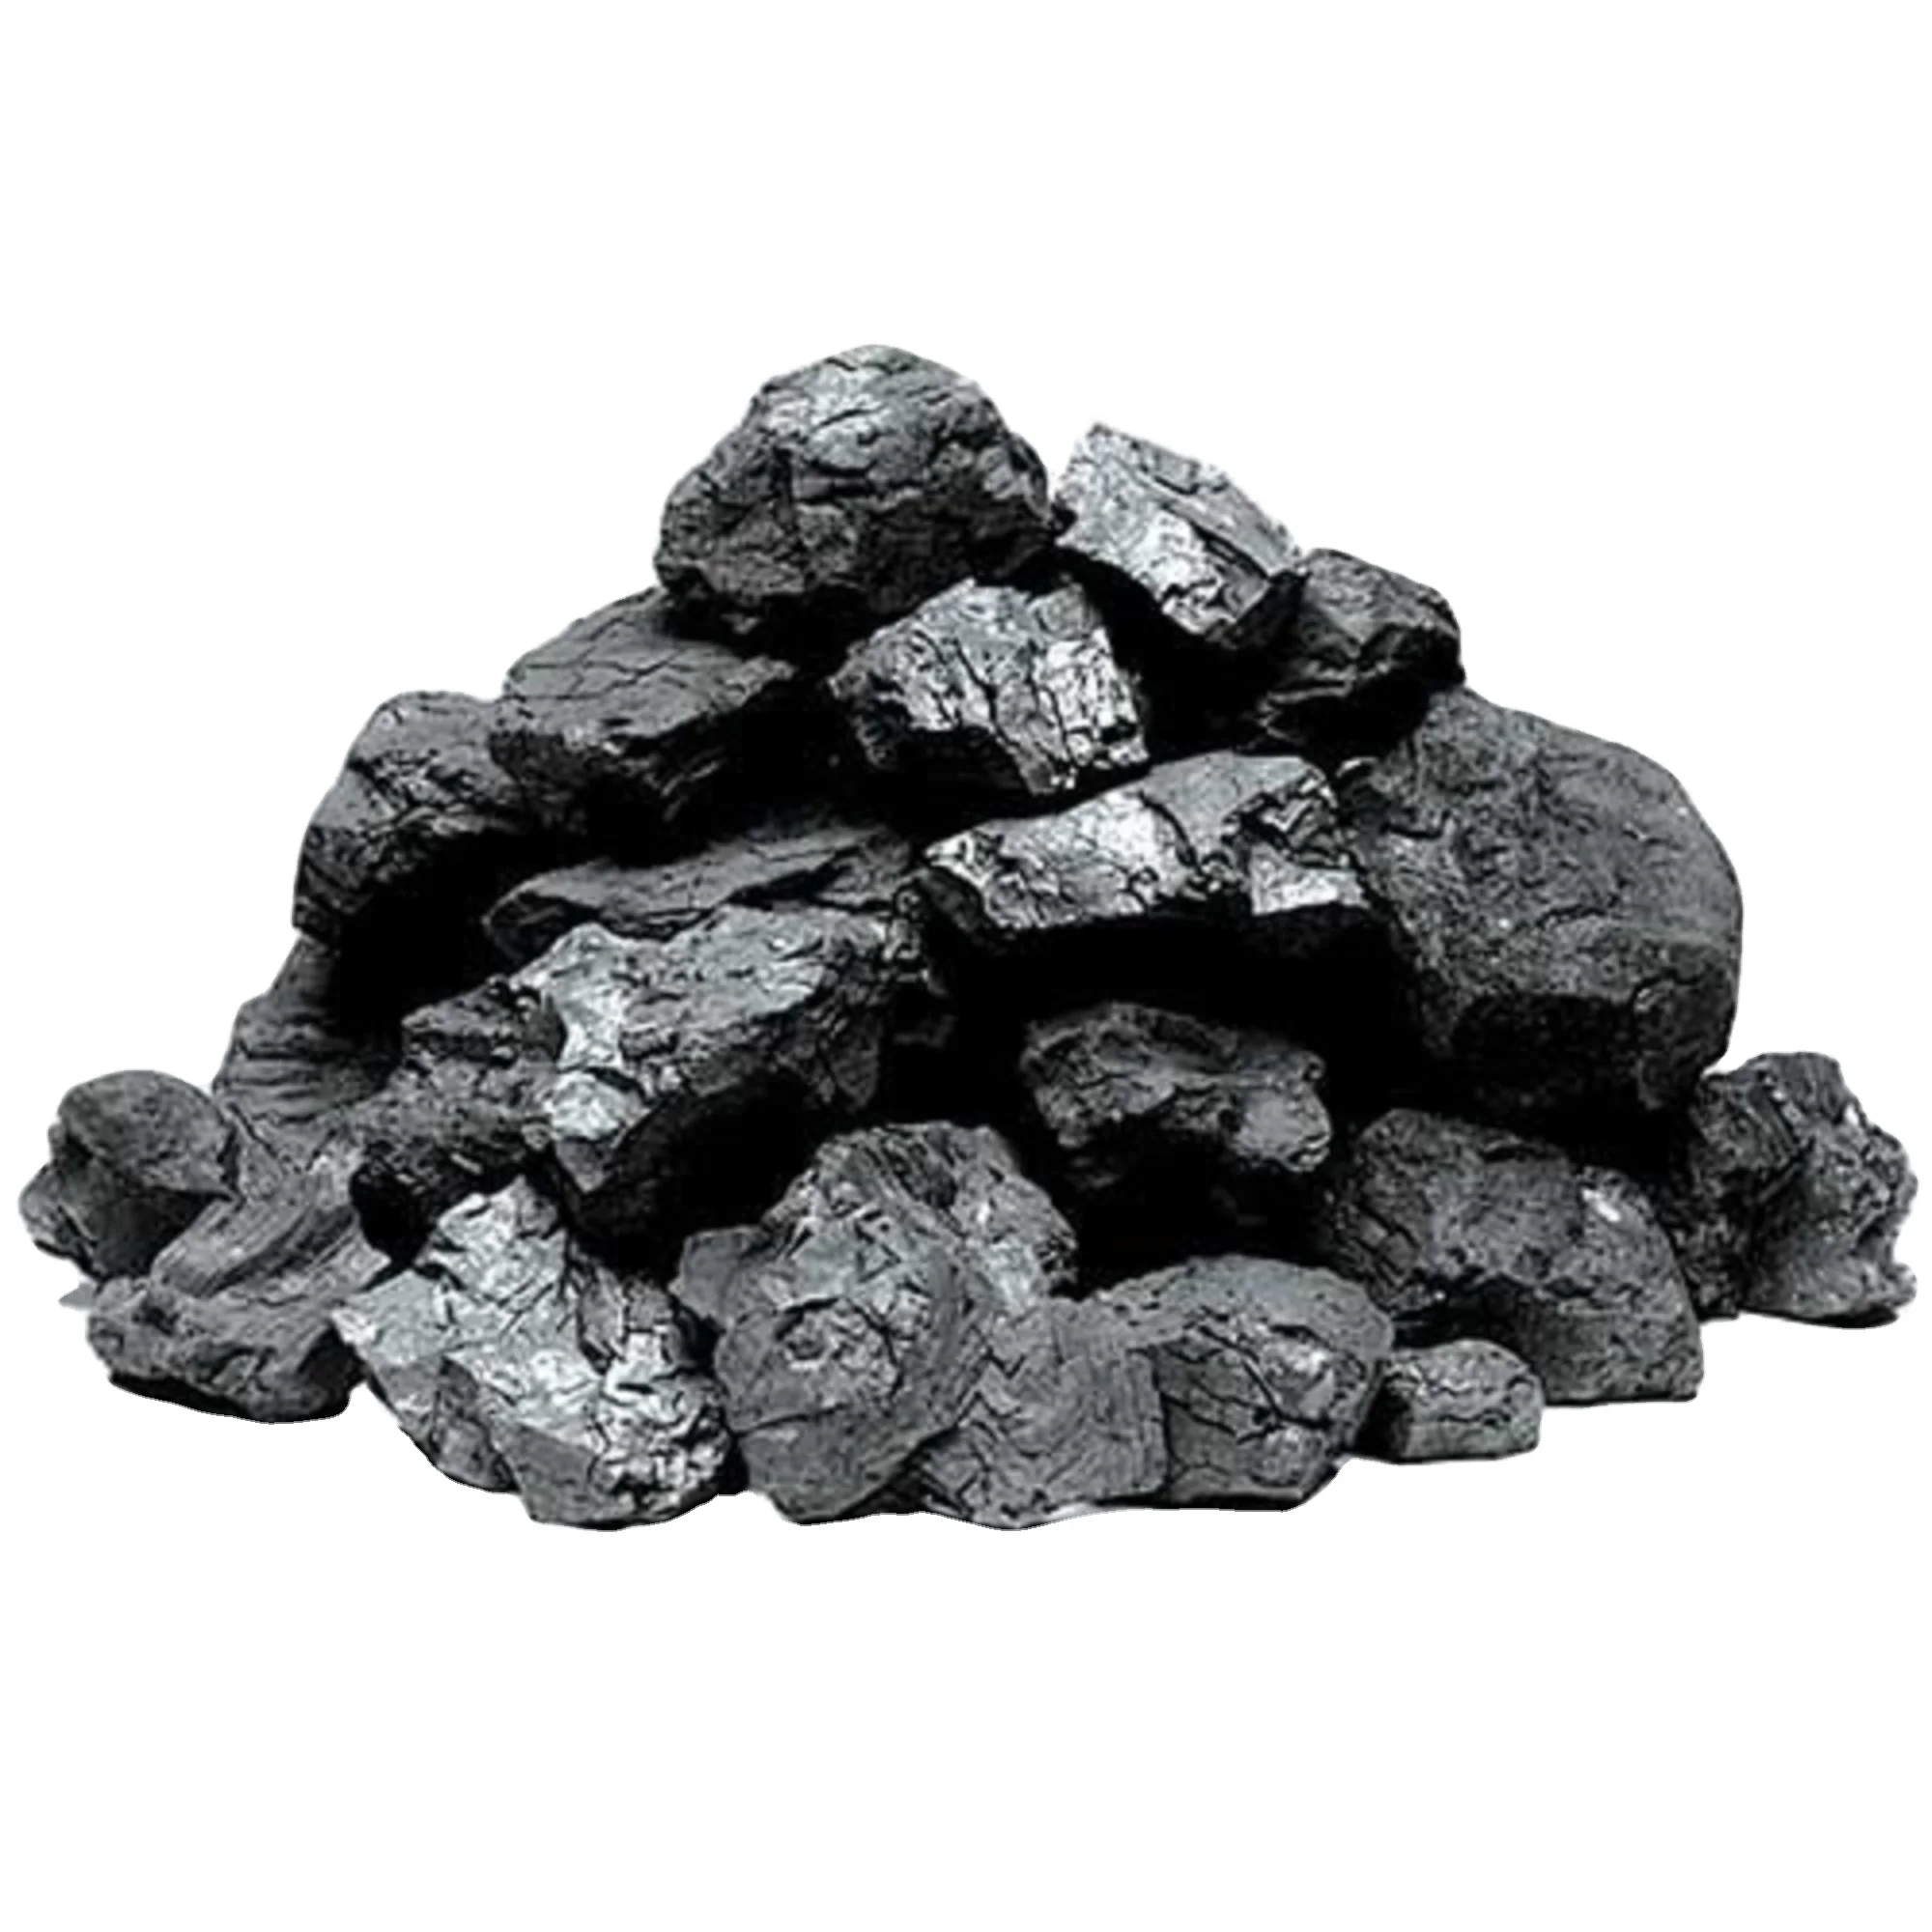 Price of steam coal фото 14